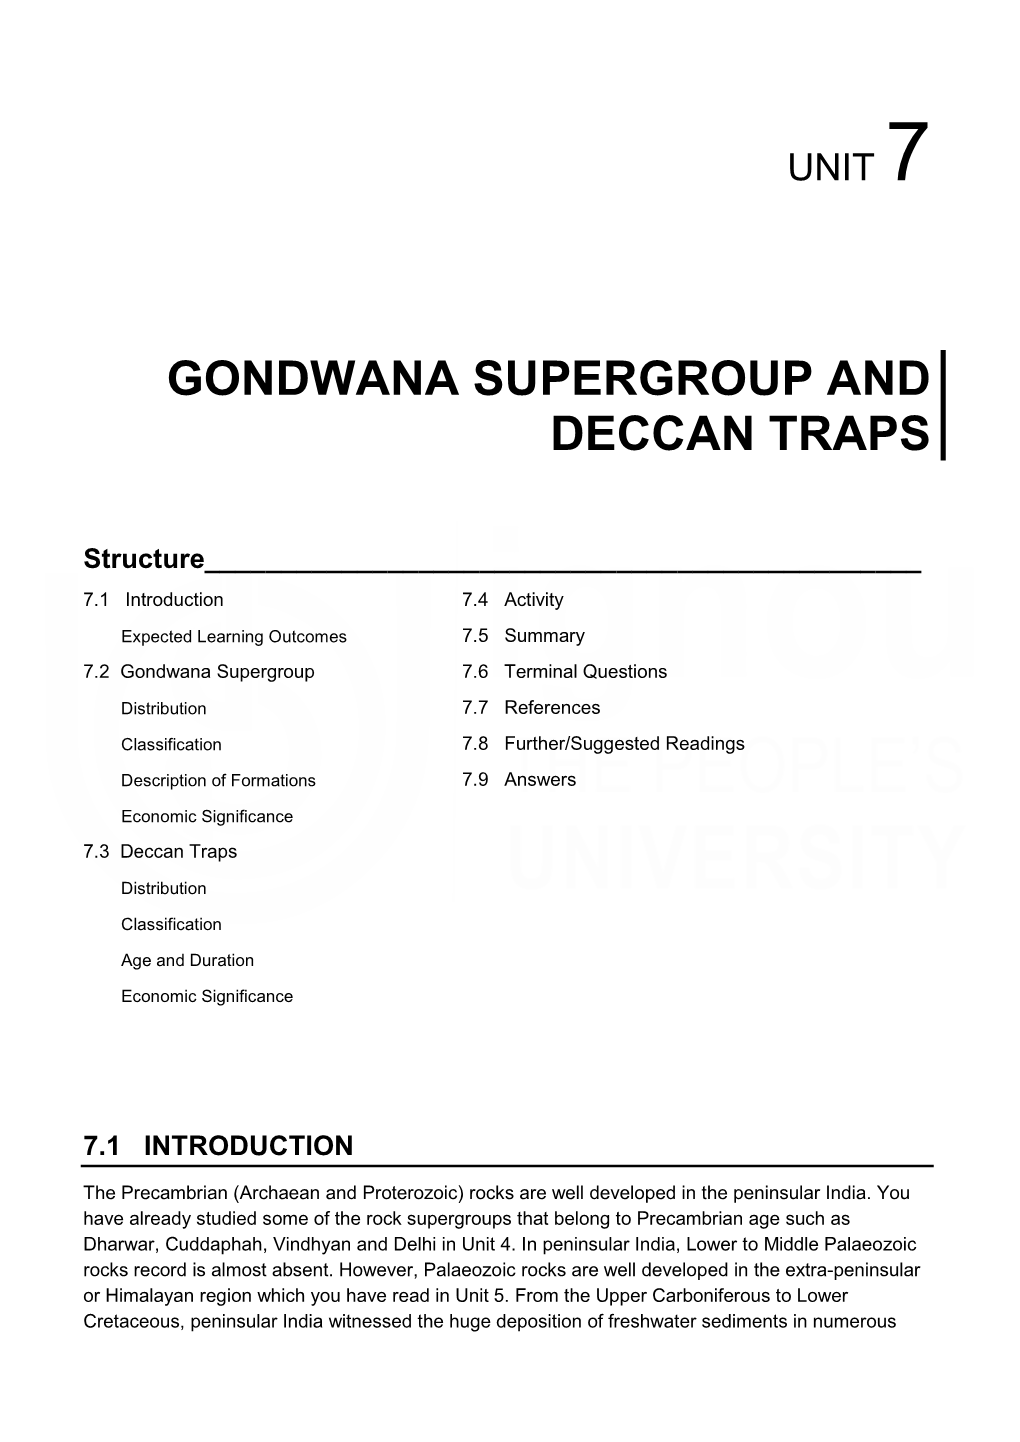 Gondwana Supergroup and Deccan Traps